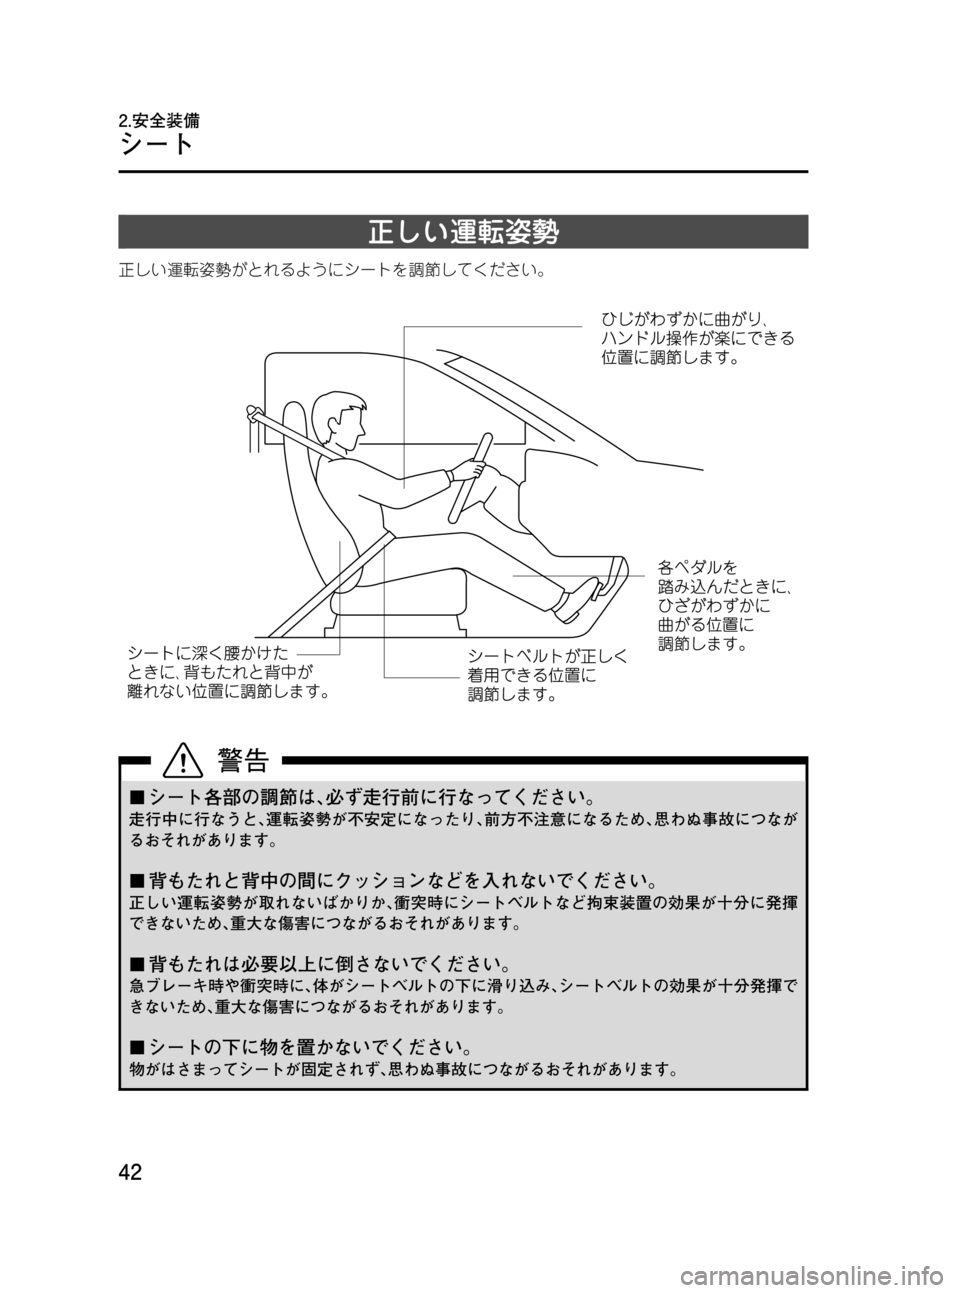 MAZDA MODEL RX 8 2008  取扱説明書 (in Japanese) Black plate (42,1)
正しい運転姿勢
正しい運転姿勢がとれるようにシートを調節してください。
¢シート各部の調節は､必ず走行前に行なってください。